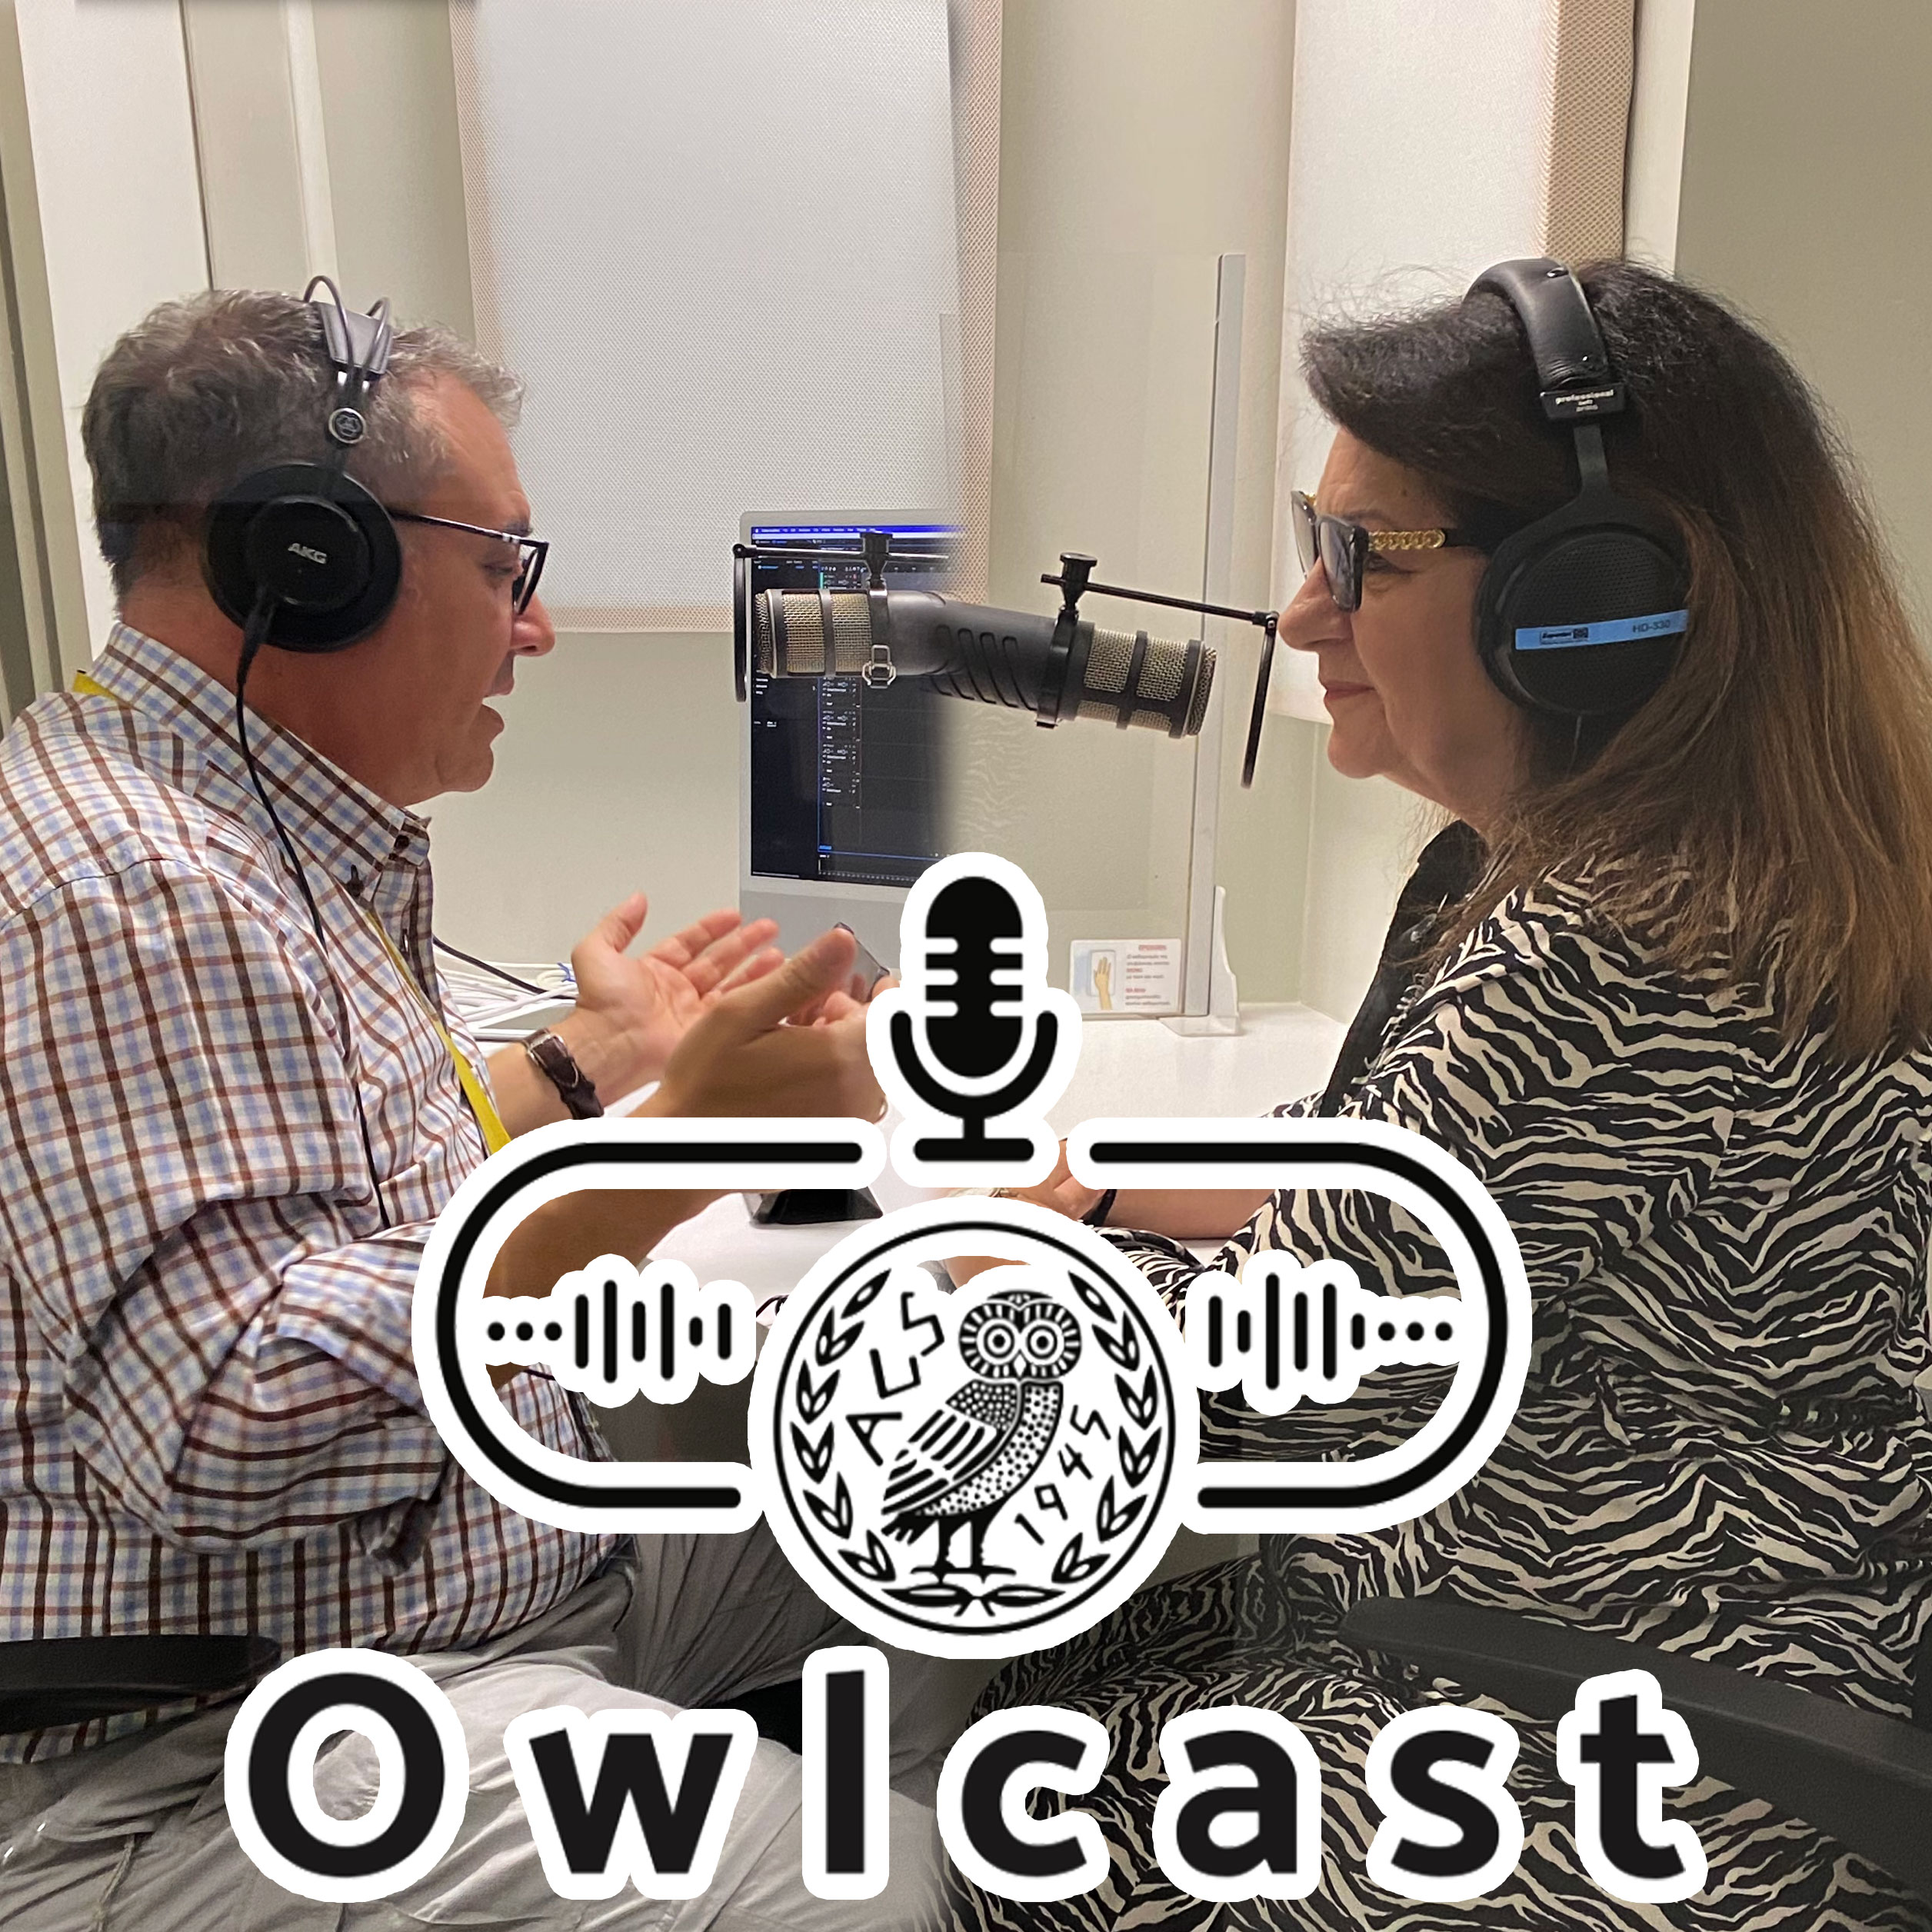 Owlcast 64 - with President Pelonis